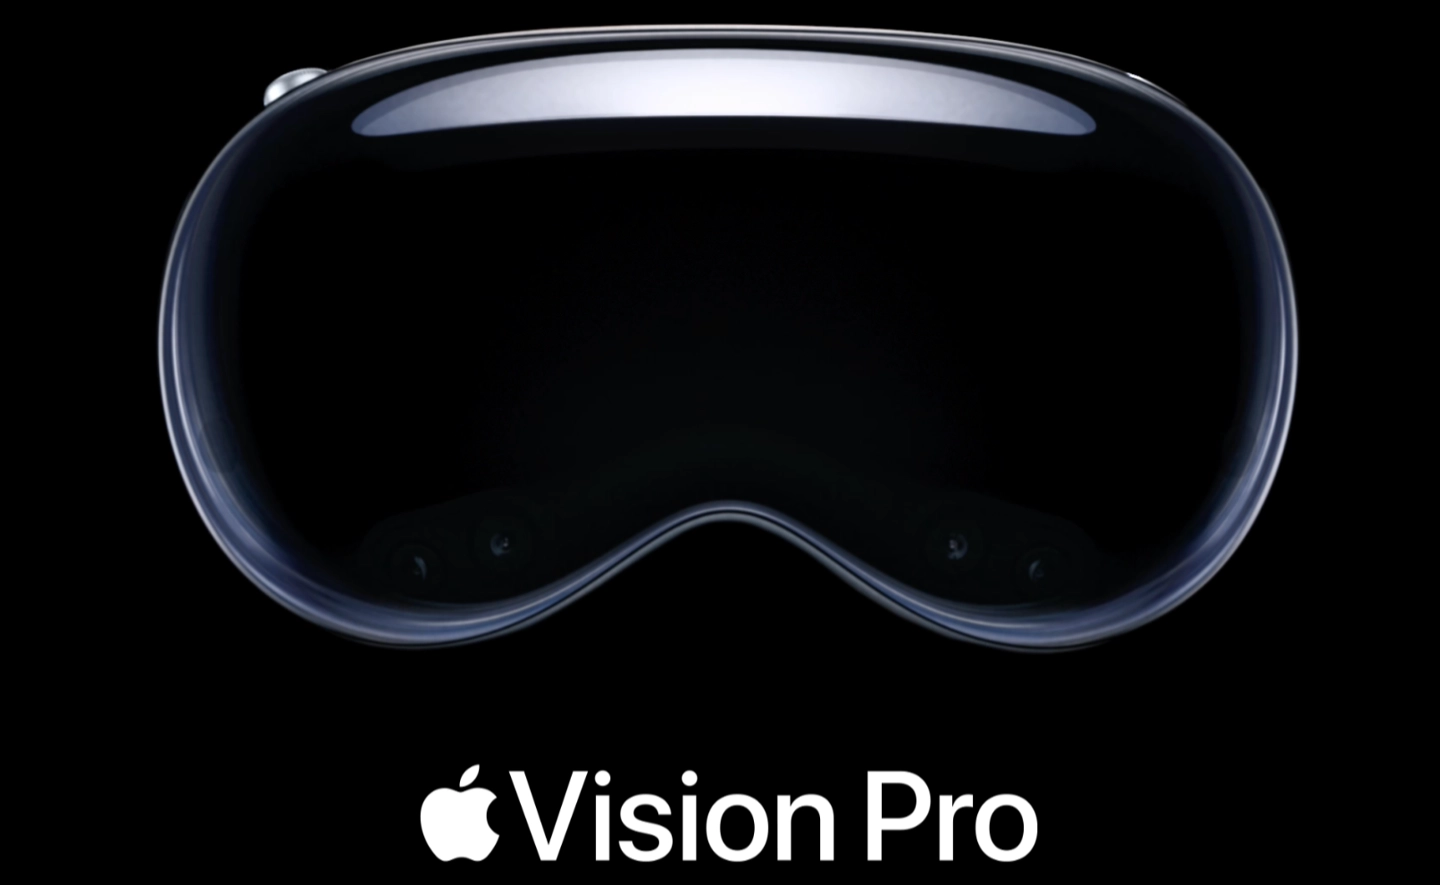 Vision Pro头显上架拼多多“品牌百亿补贴”：相比京东国际便宜5000元